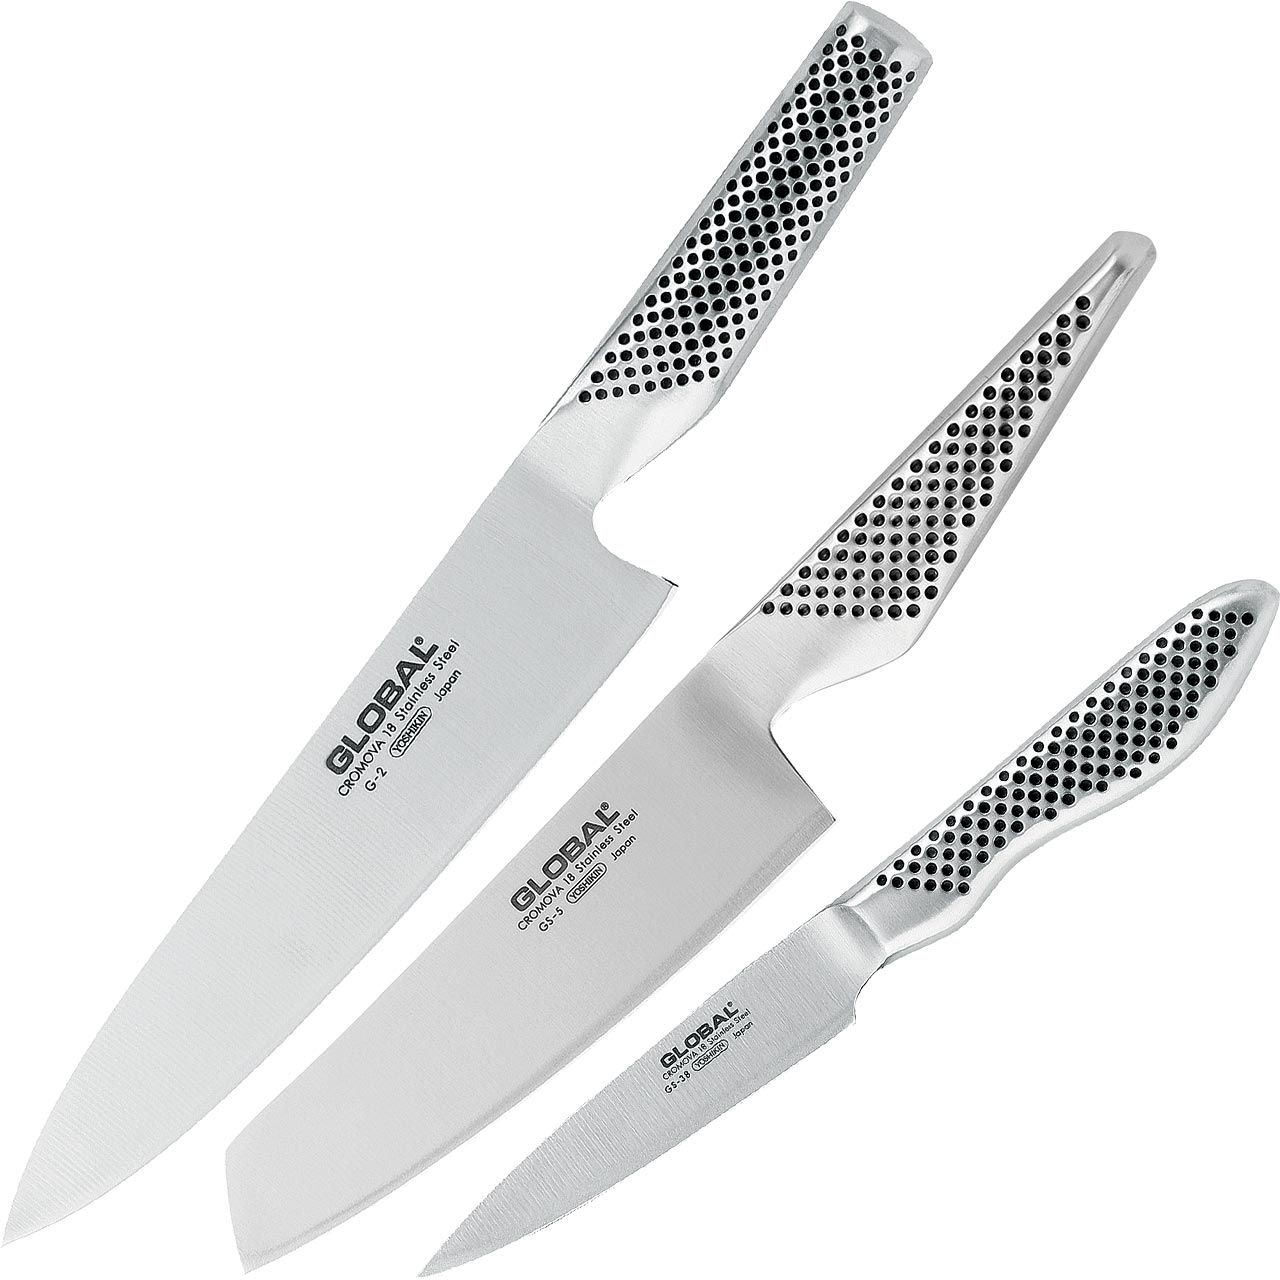 Global 3-piece Knife Set G-2538